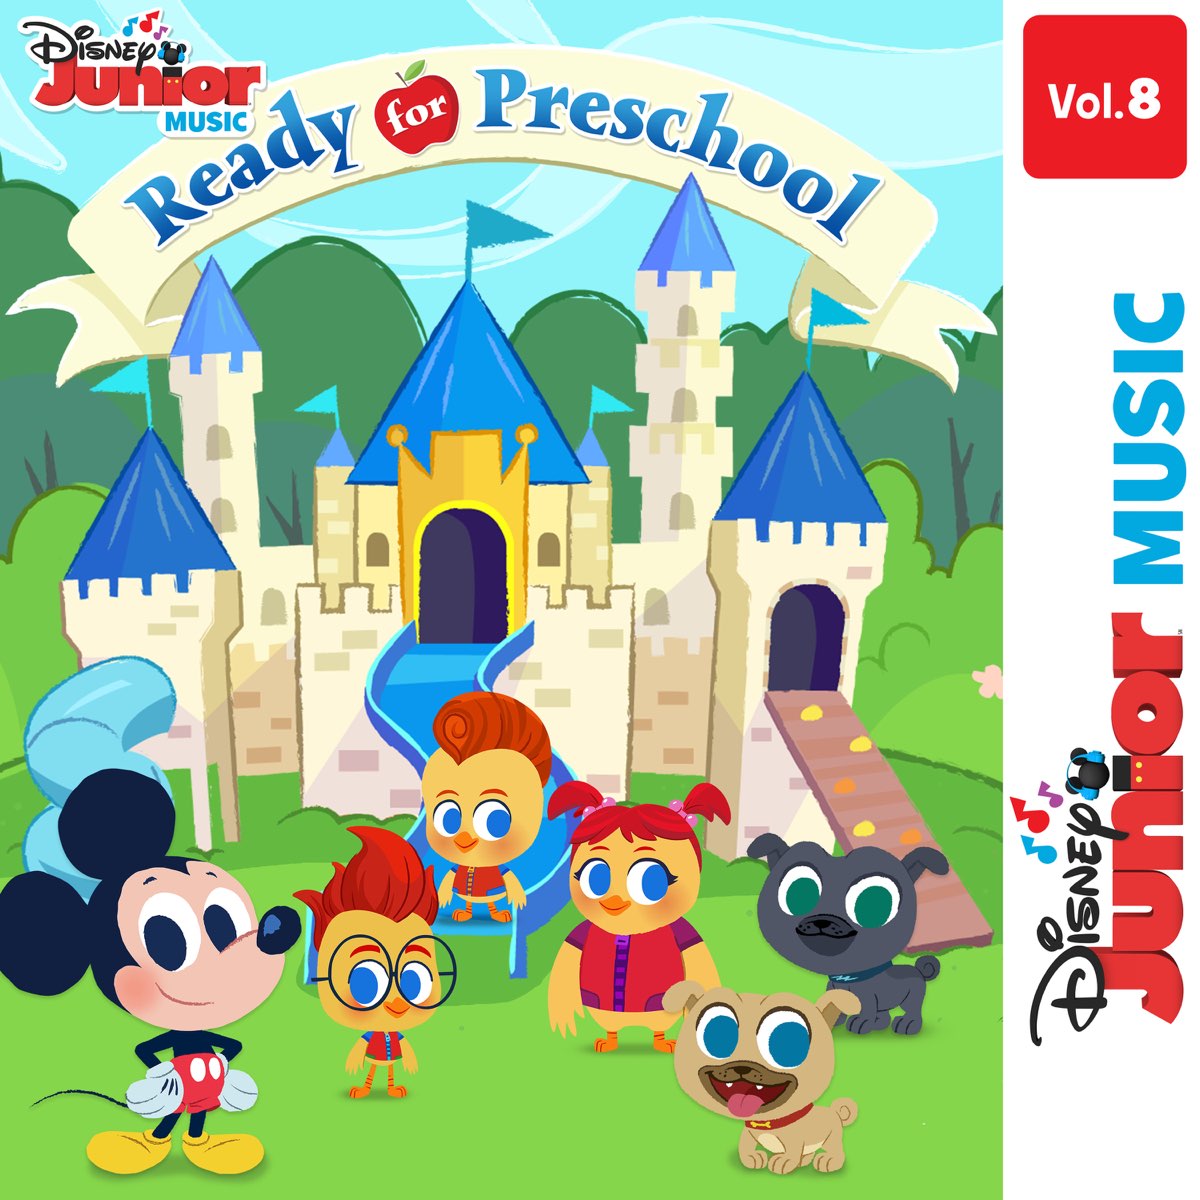 ‎Disney Junior Music: Ready for Preschool, Vol. 8 - EP by Rob Cantor ...